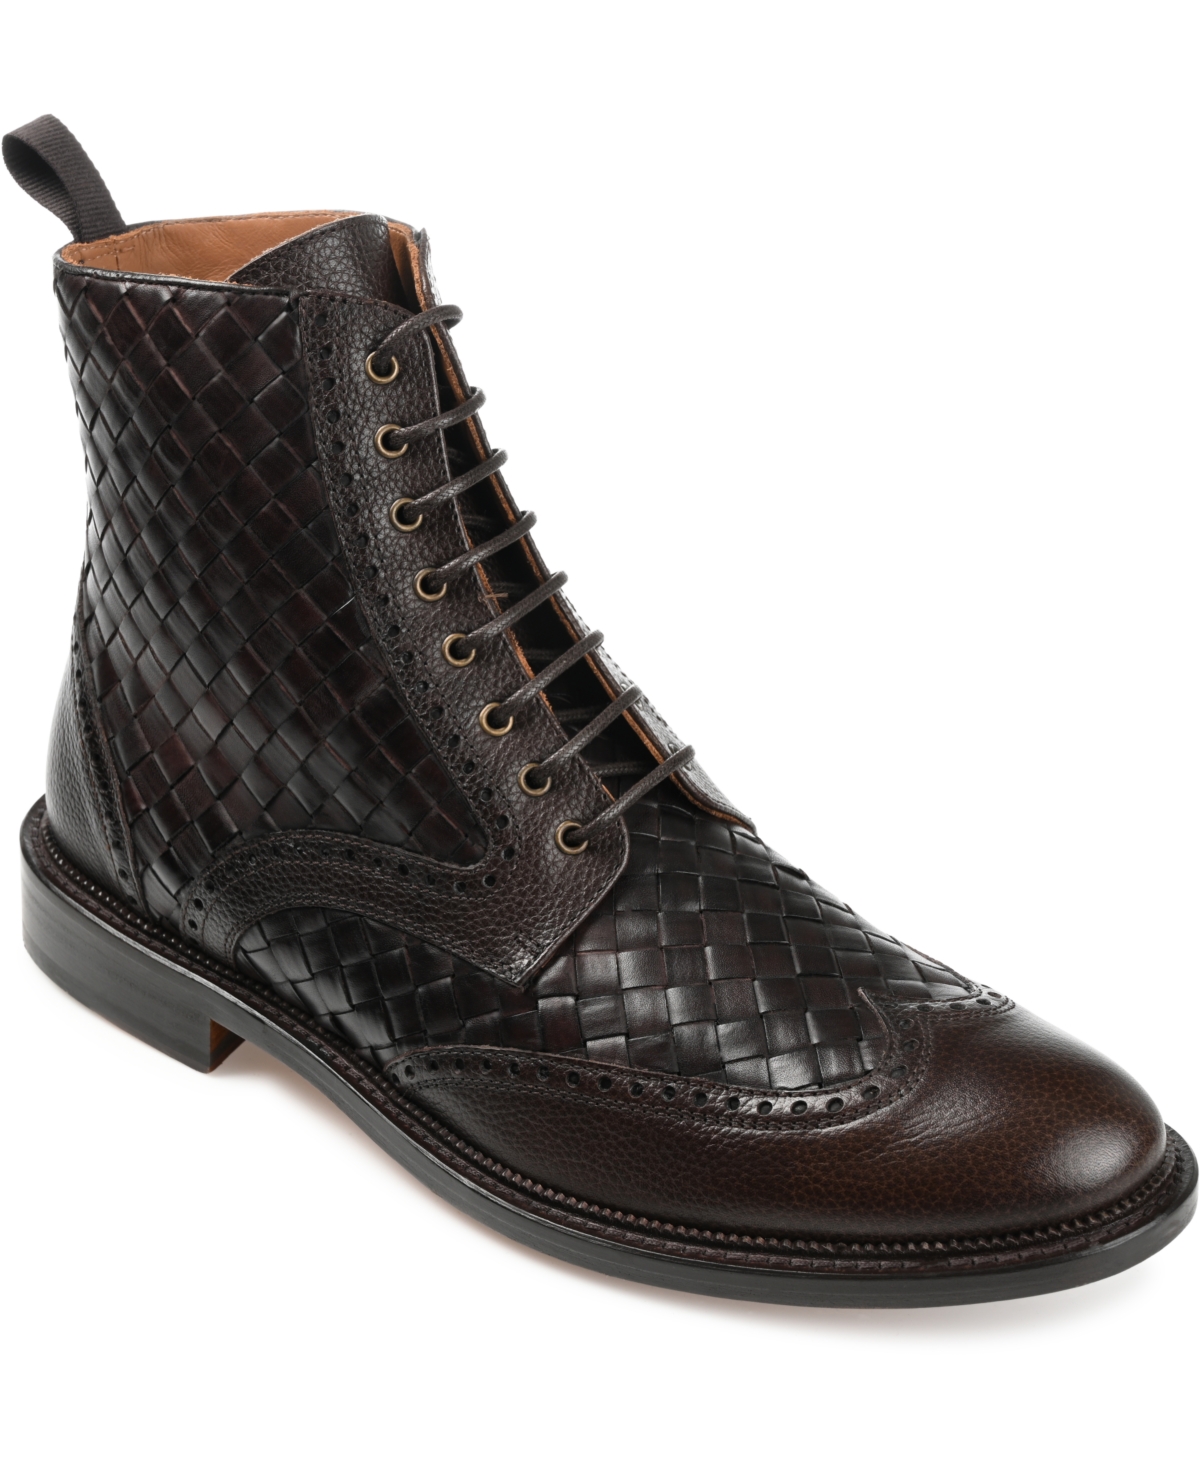 Men's Saint Handwoven Leather Wingtip Dress Boots - Black